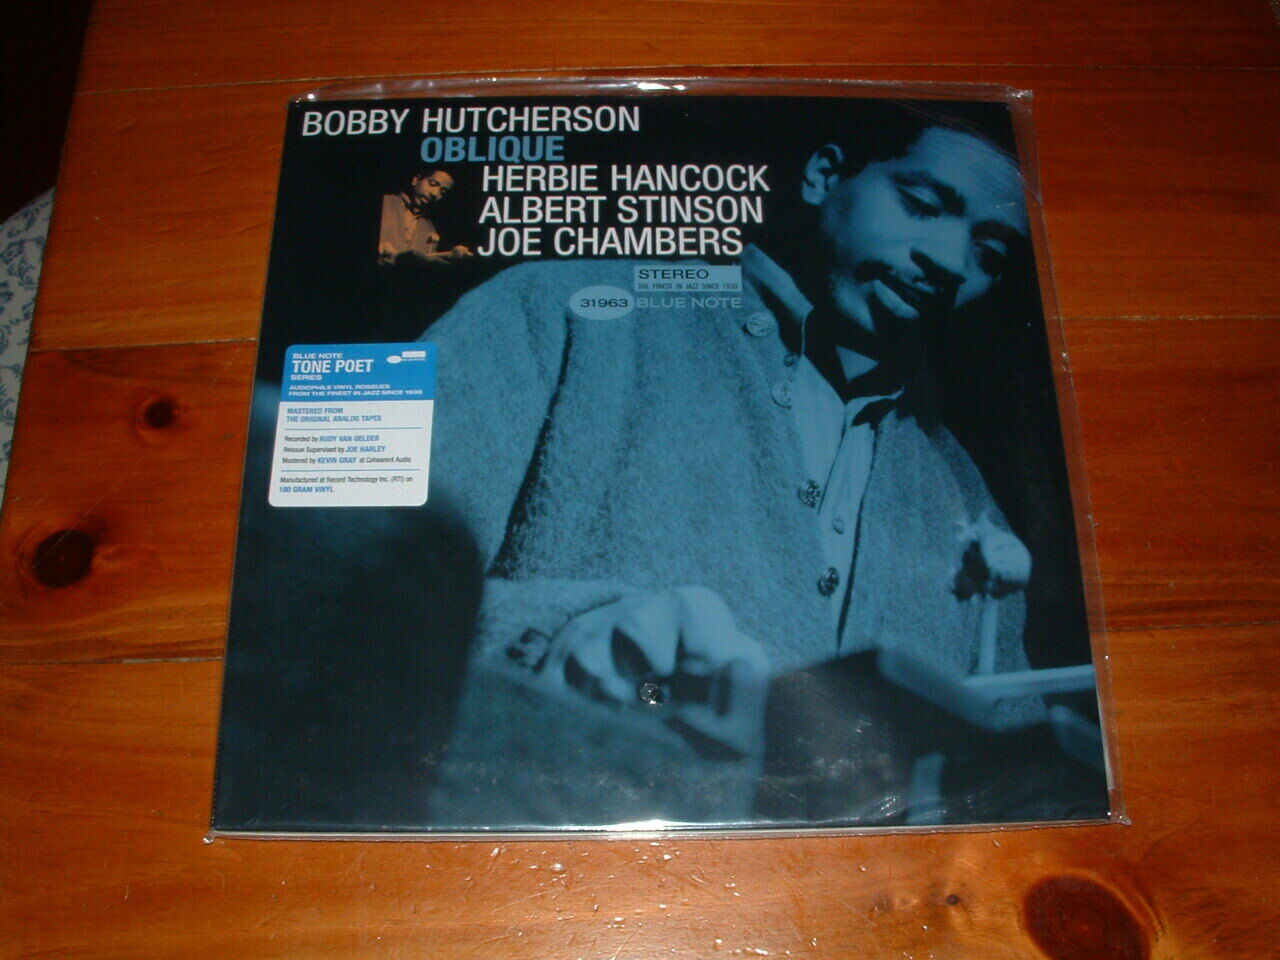 popsike.com - Bobby Hutcherson - Oblique Blue Note Tone Poet